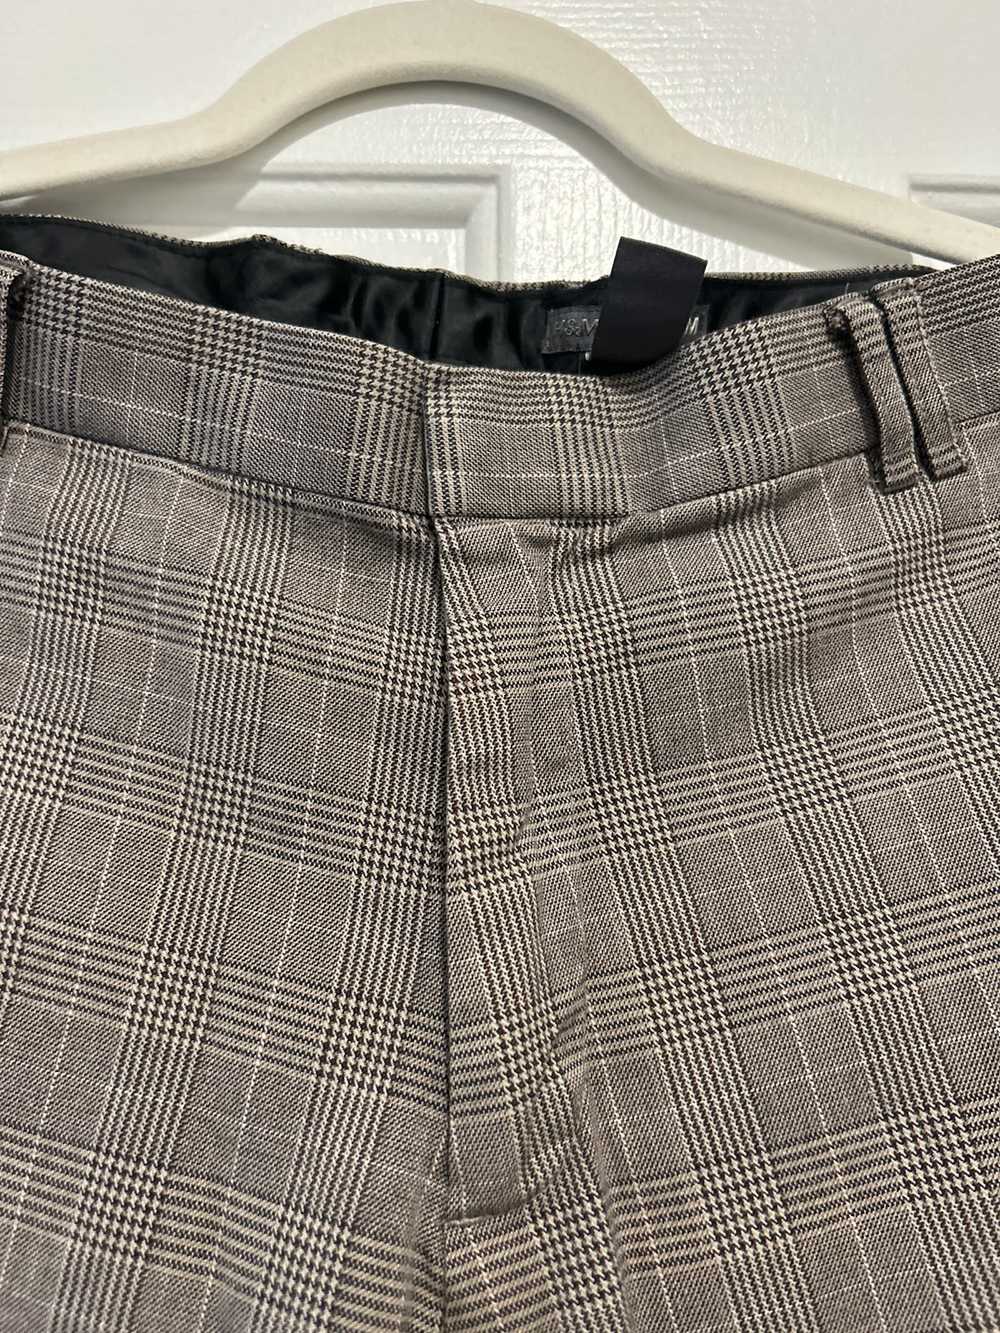 H&M Great plaid pants , brown/black - image 2